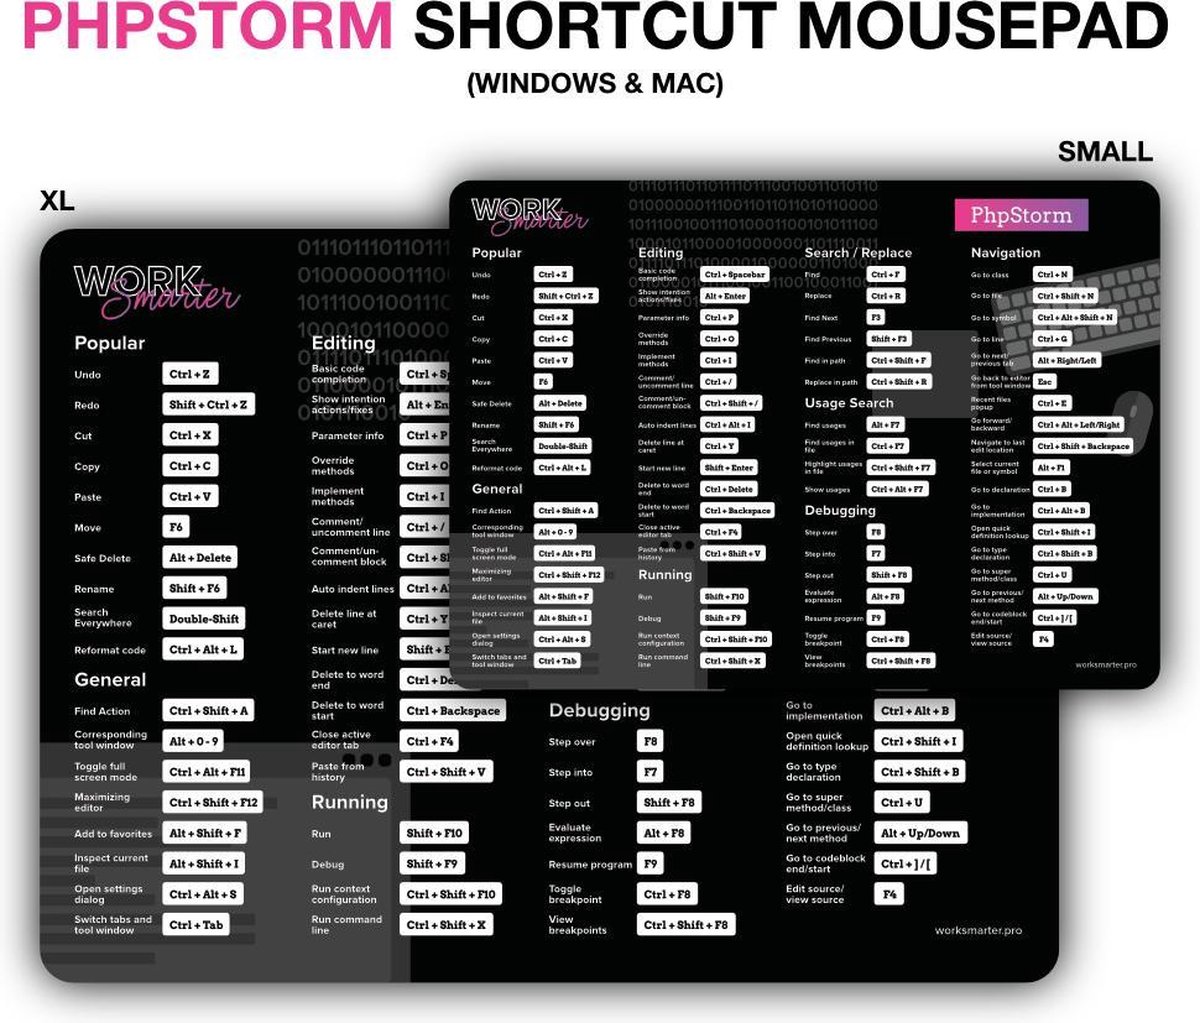 Jetbrains PHPStorm Shortcut Mousepad - XL - Windows